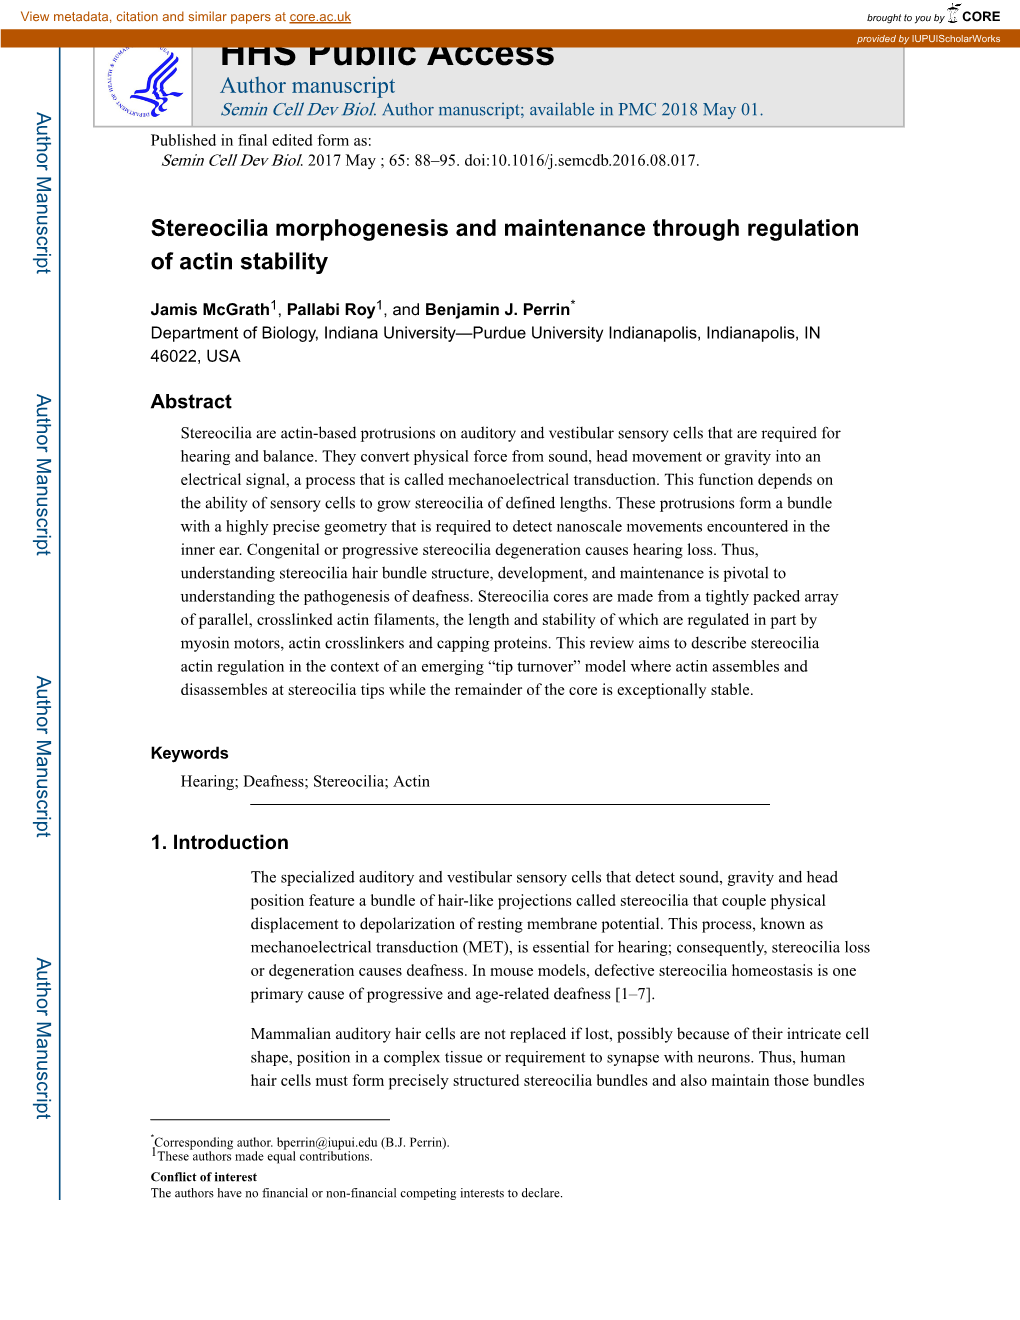 Stereocilia Morphogenesis and Maintenance Through Regulation of Actin Stability